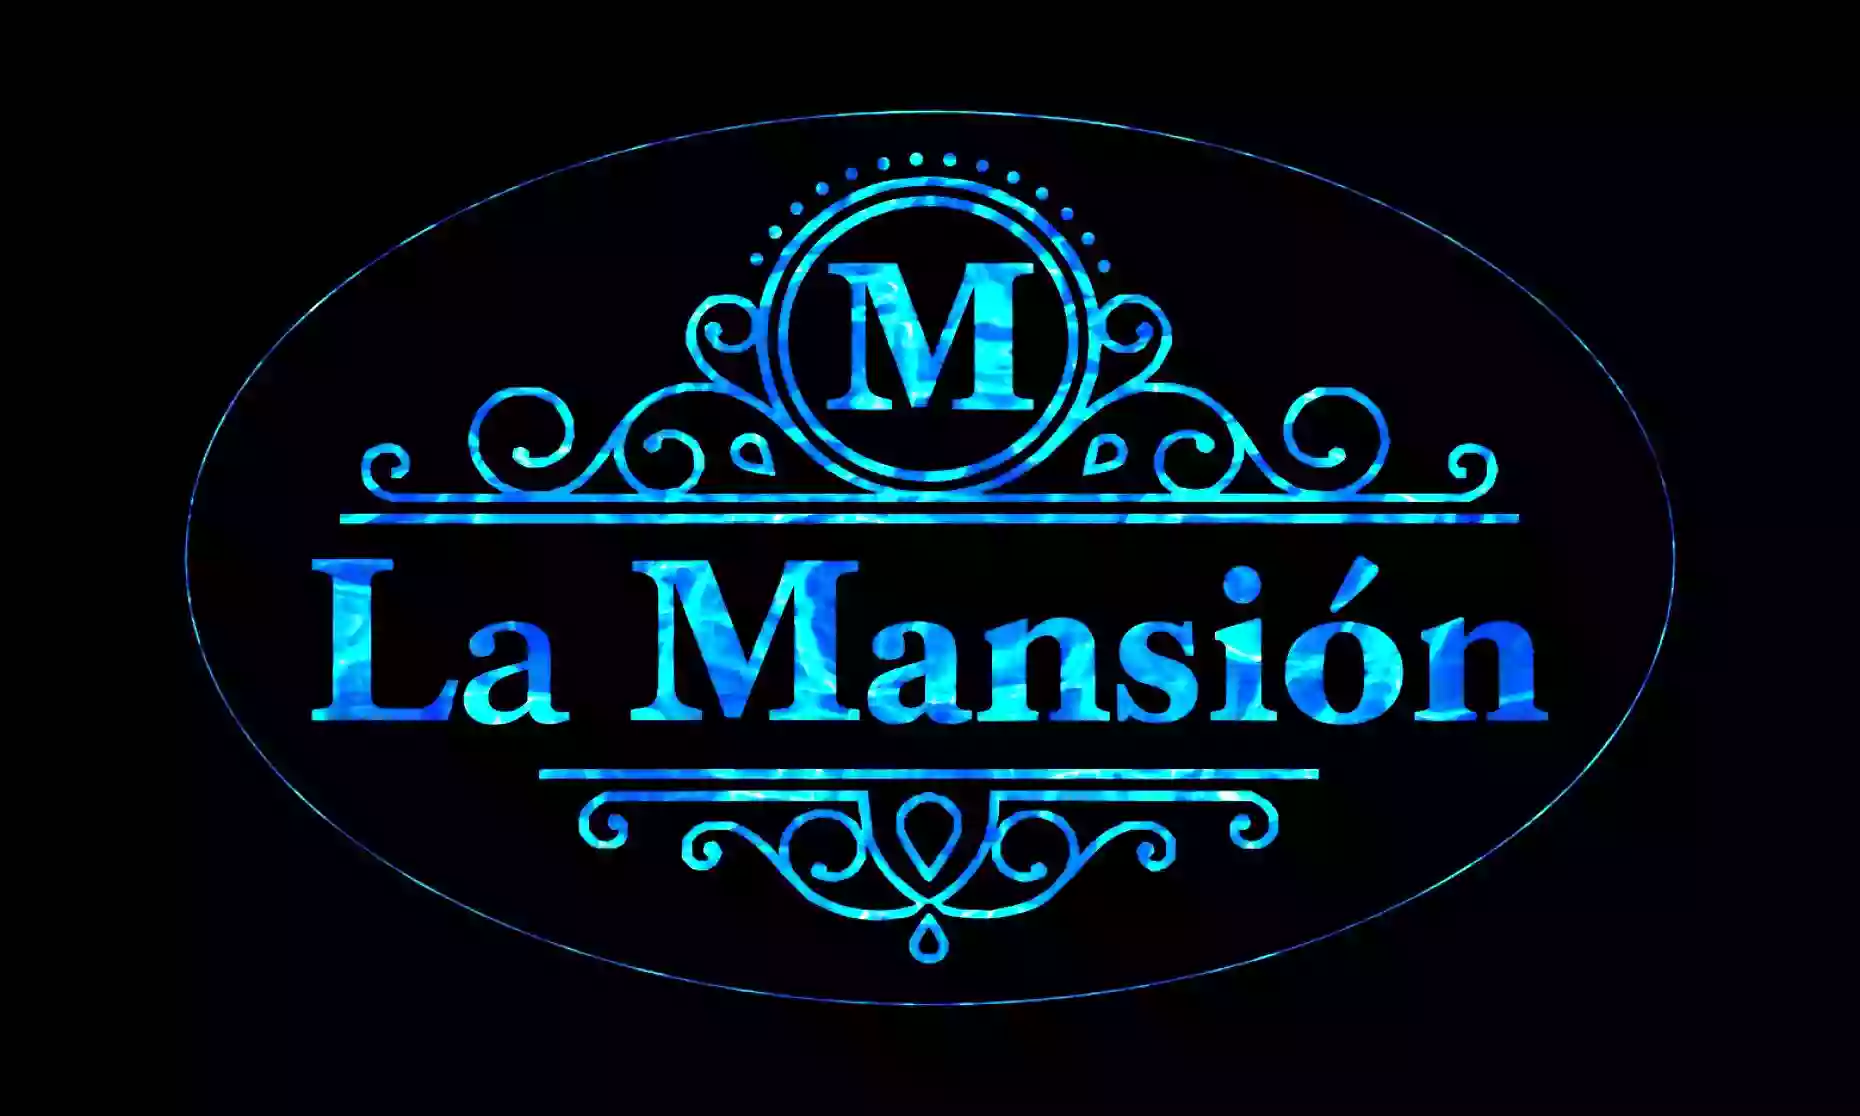 La Mansión Restaurant